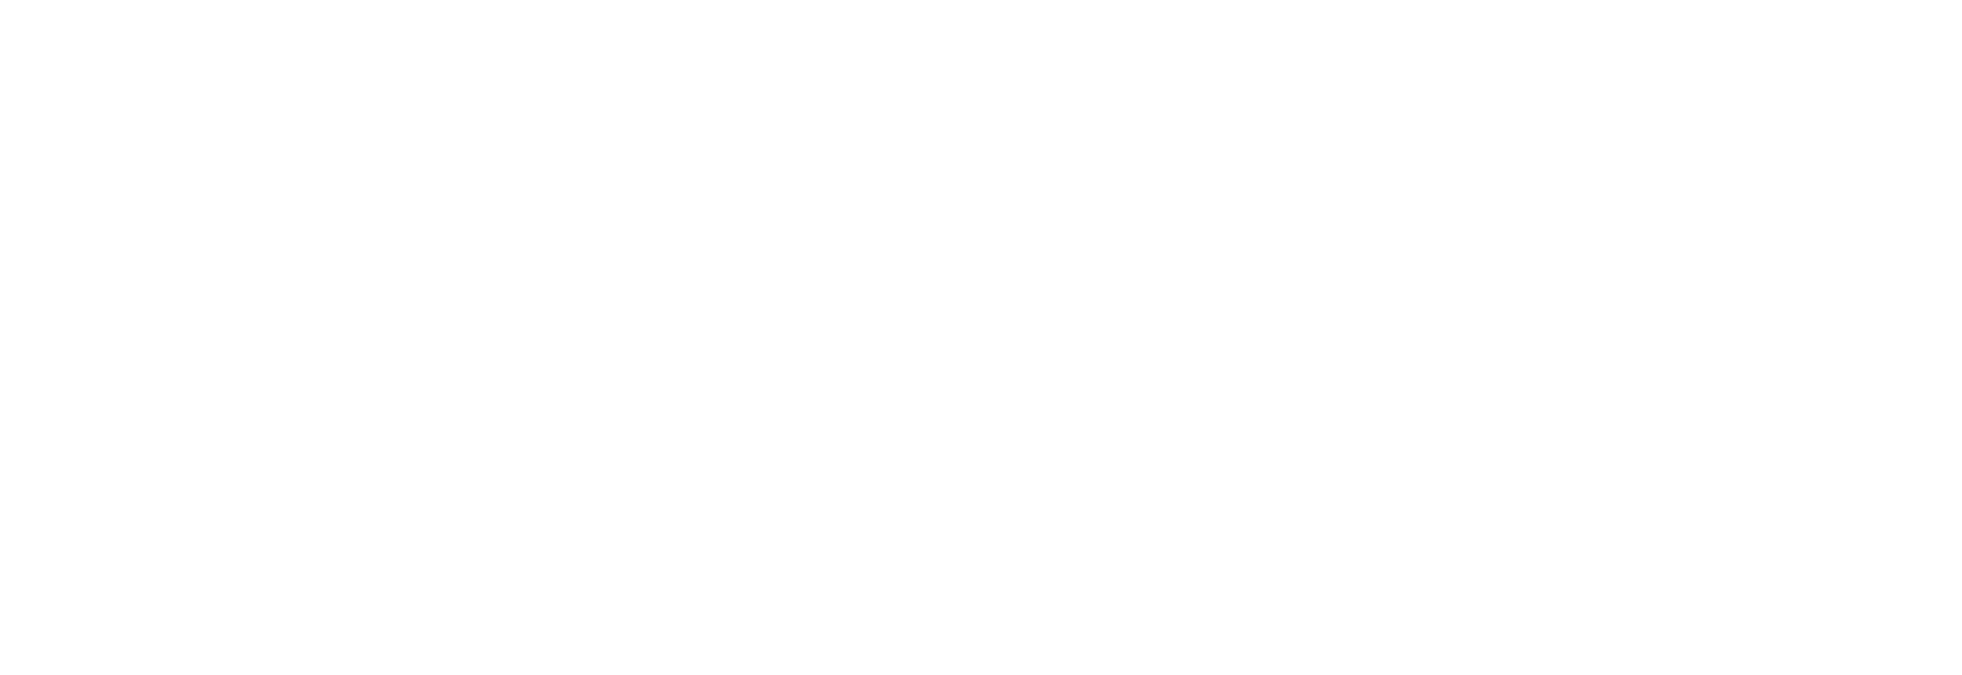 Twict Logo